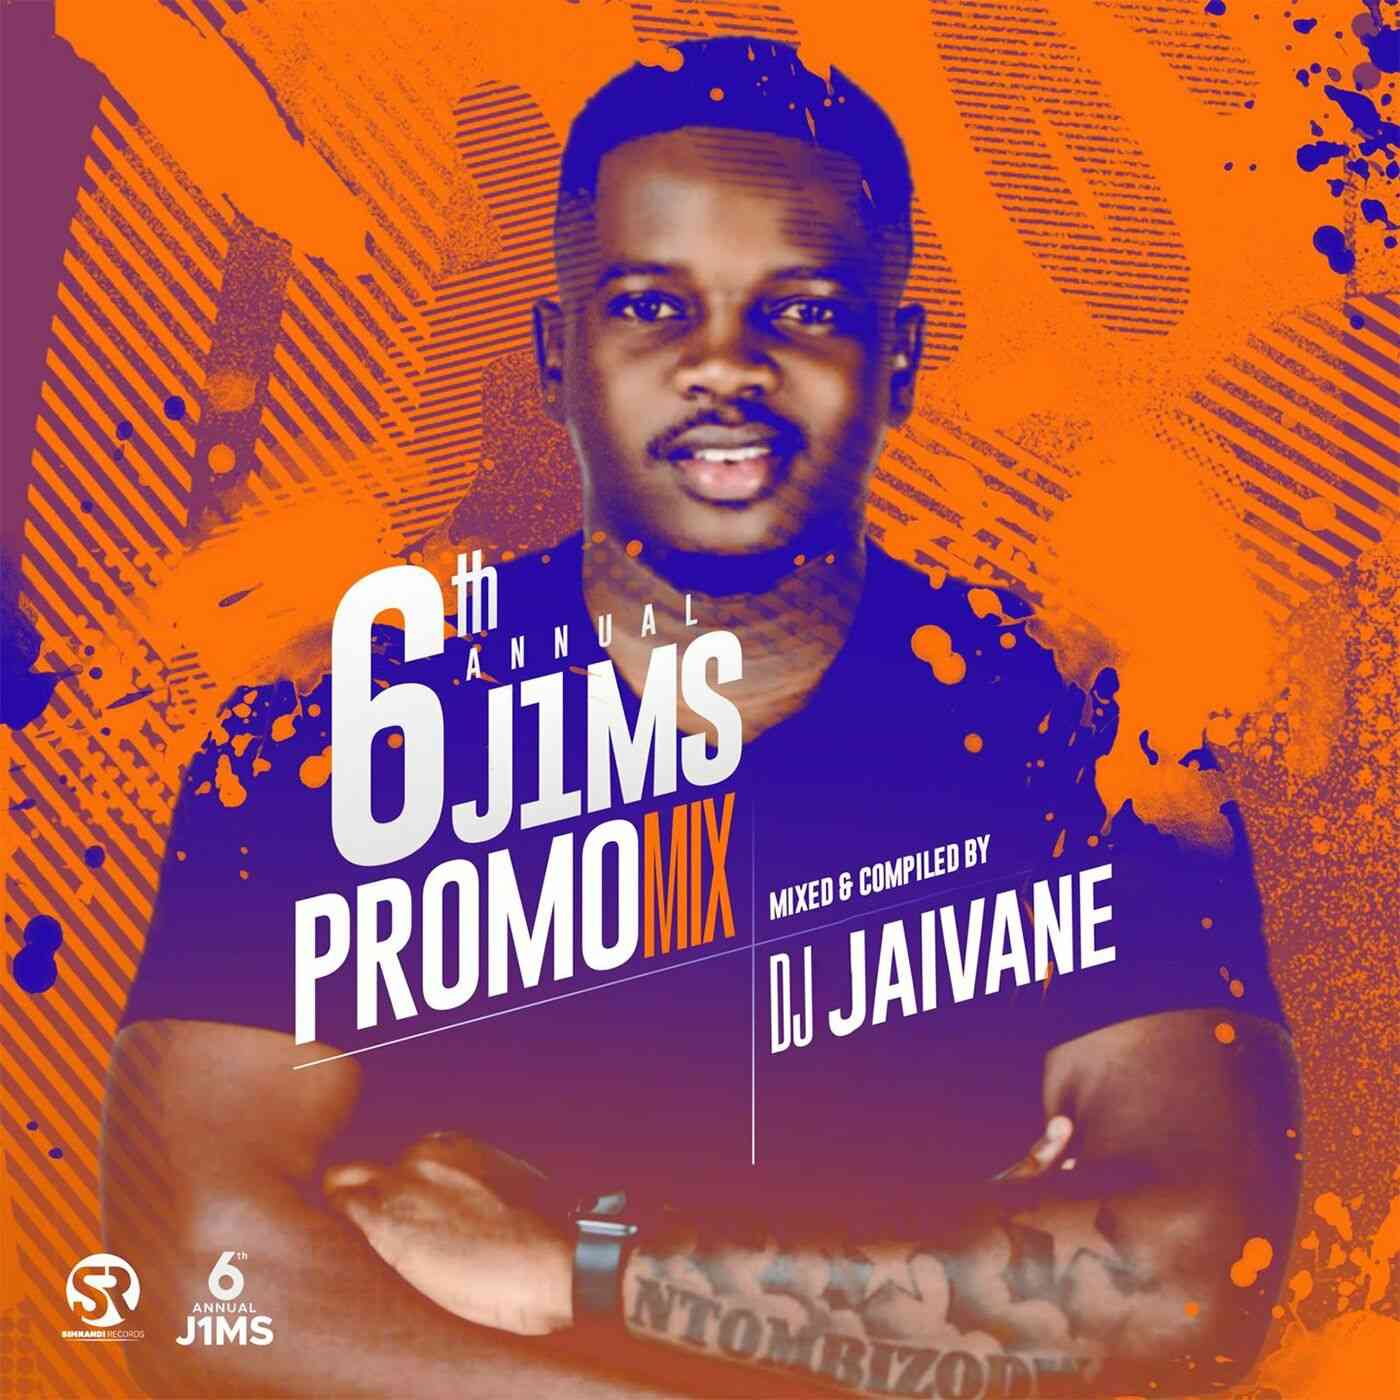 Dj Jaivane - 6th Annual J1MS Promo Mix Album 